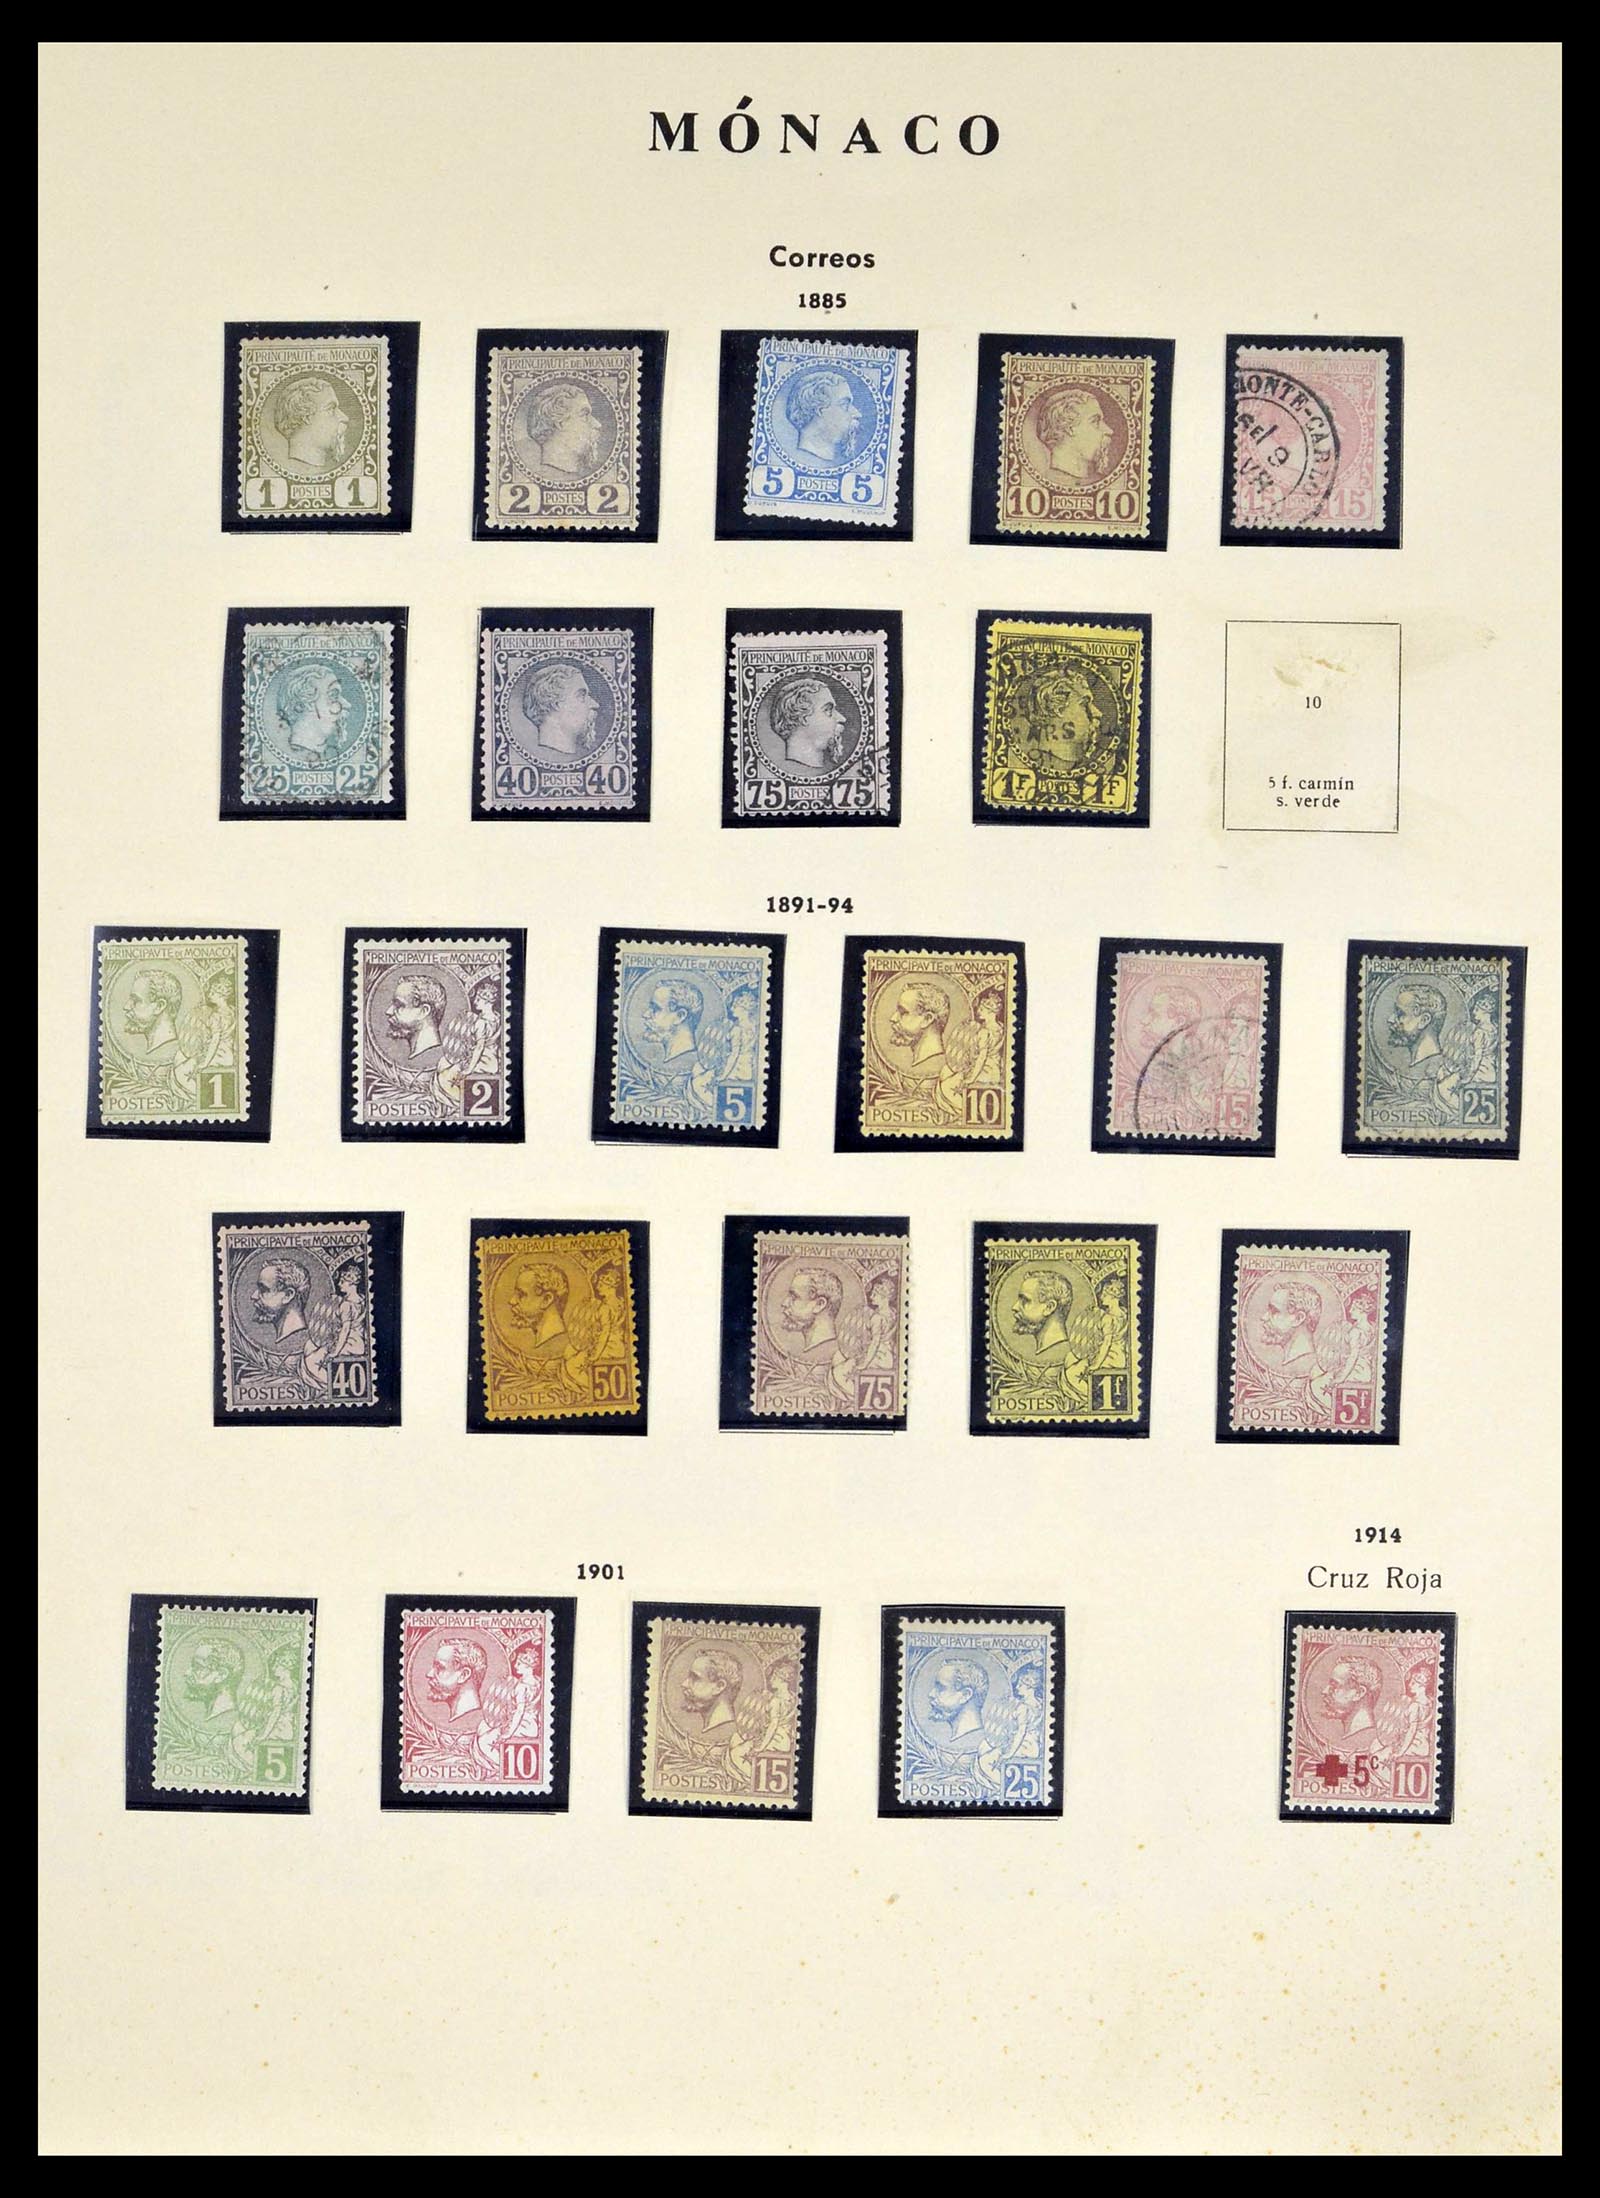 39082 0001 - Stamp collection 39082 Monaco 1885-1964.